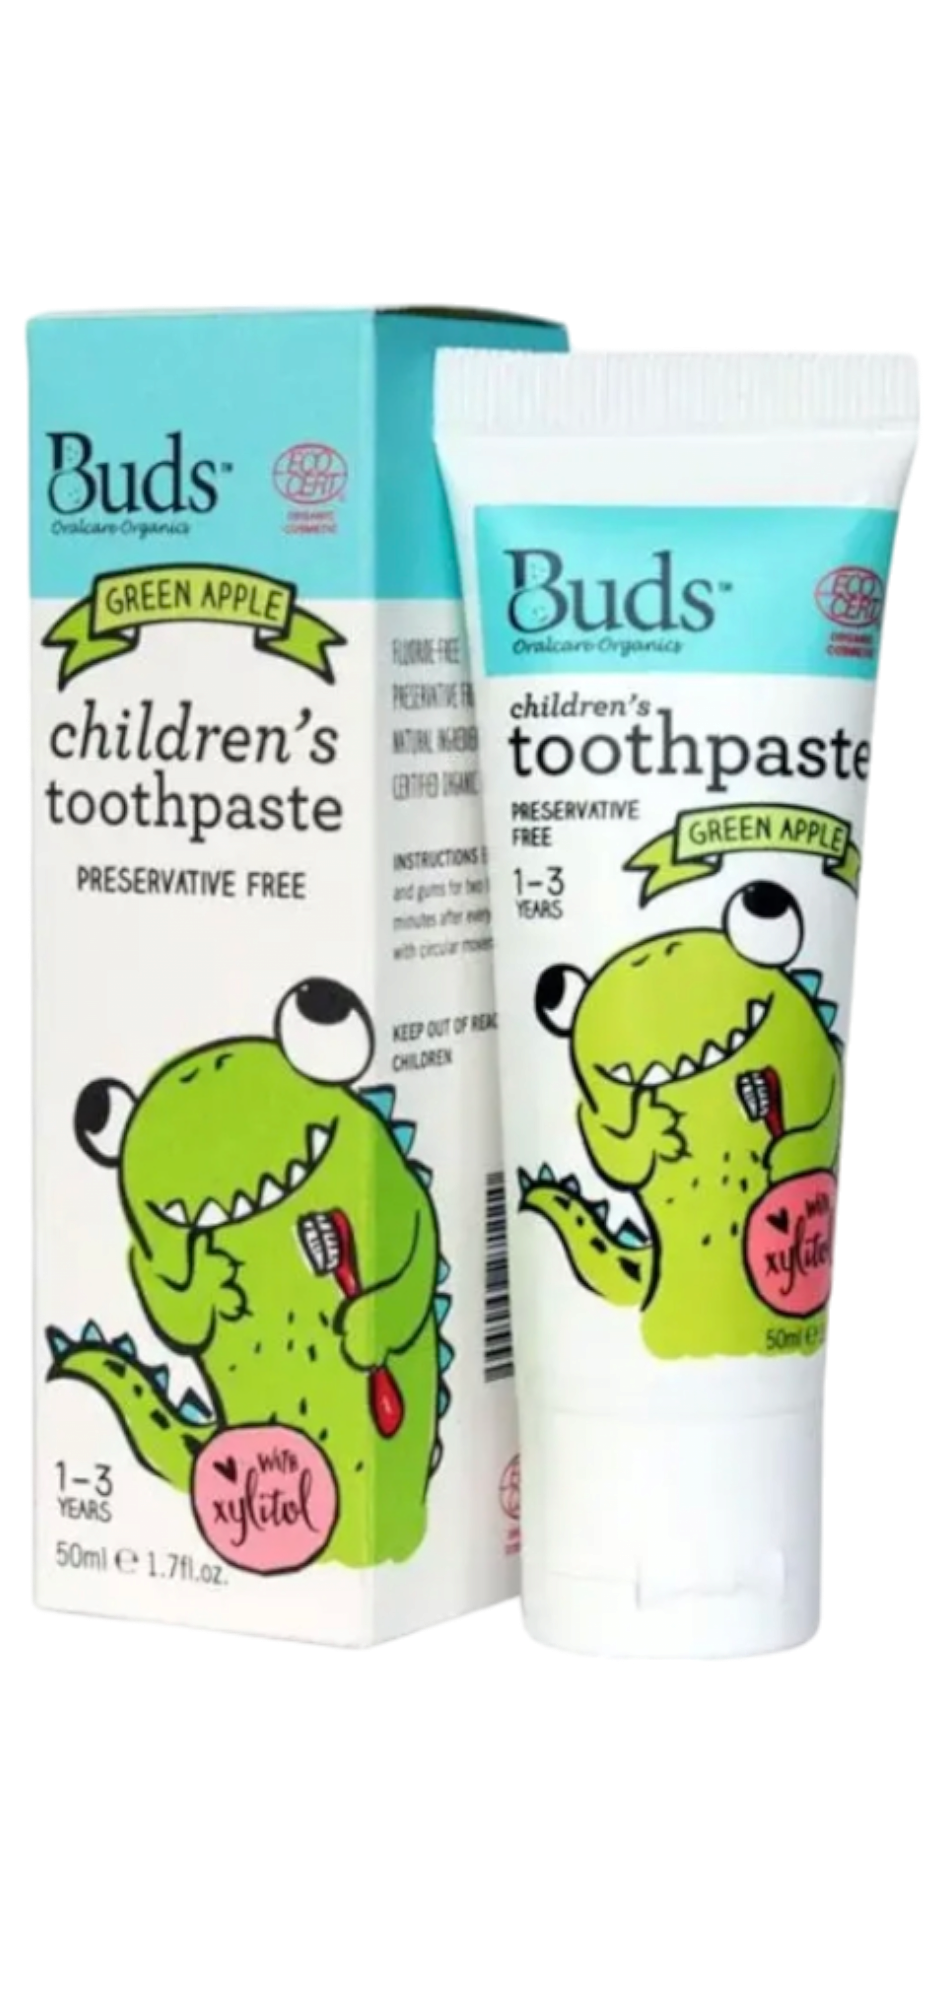 Buds Children's Toothpaste Preservative Free Green Apple 1-3y 50ml